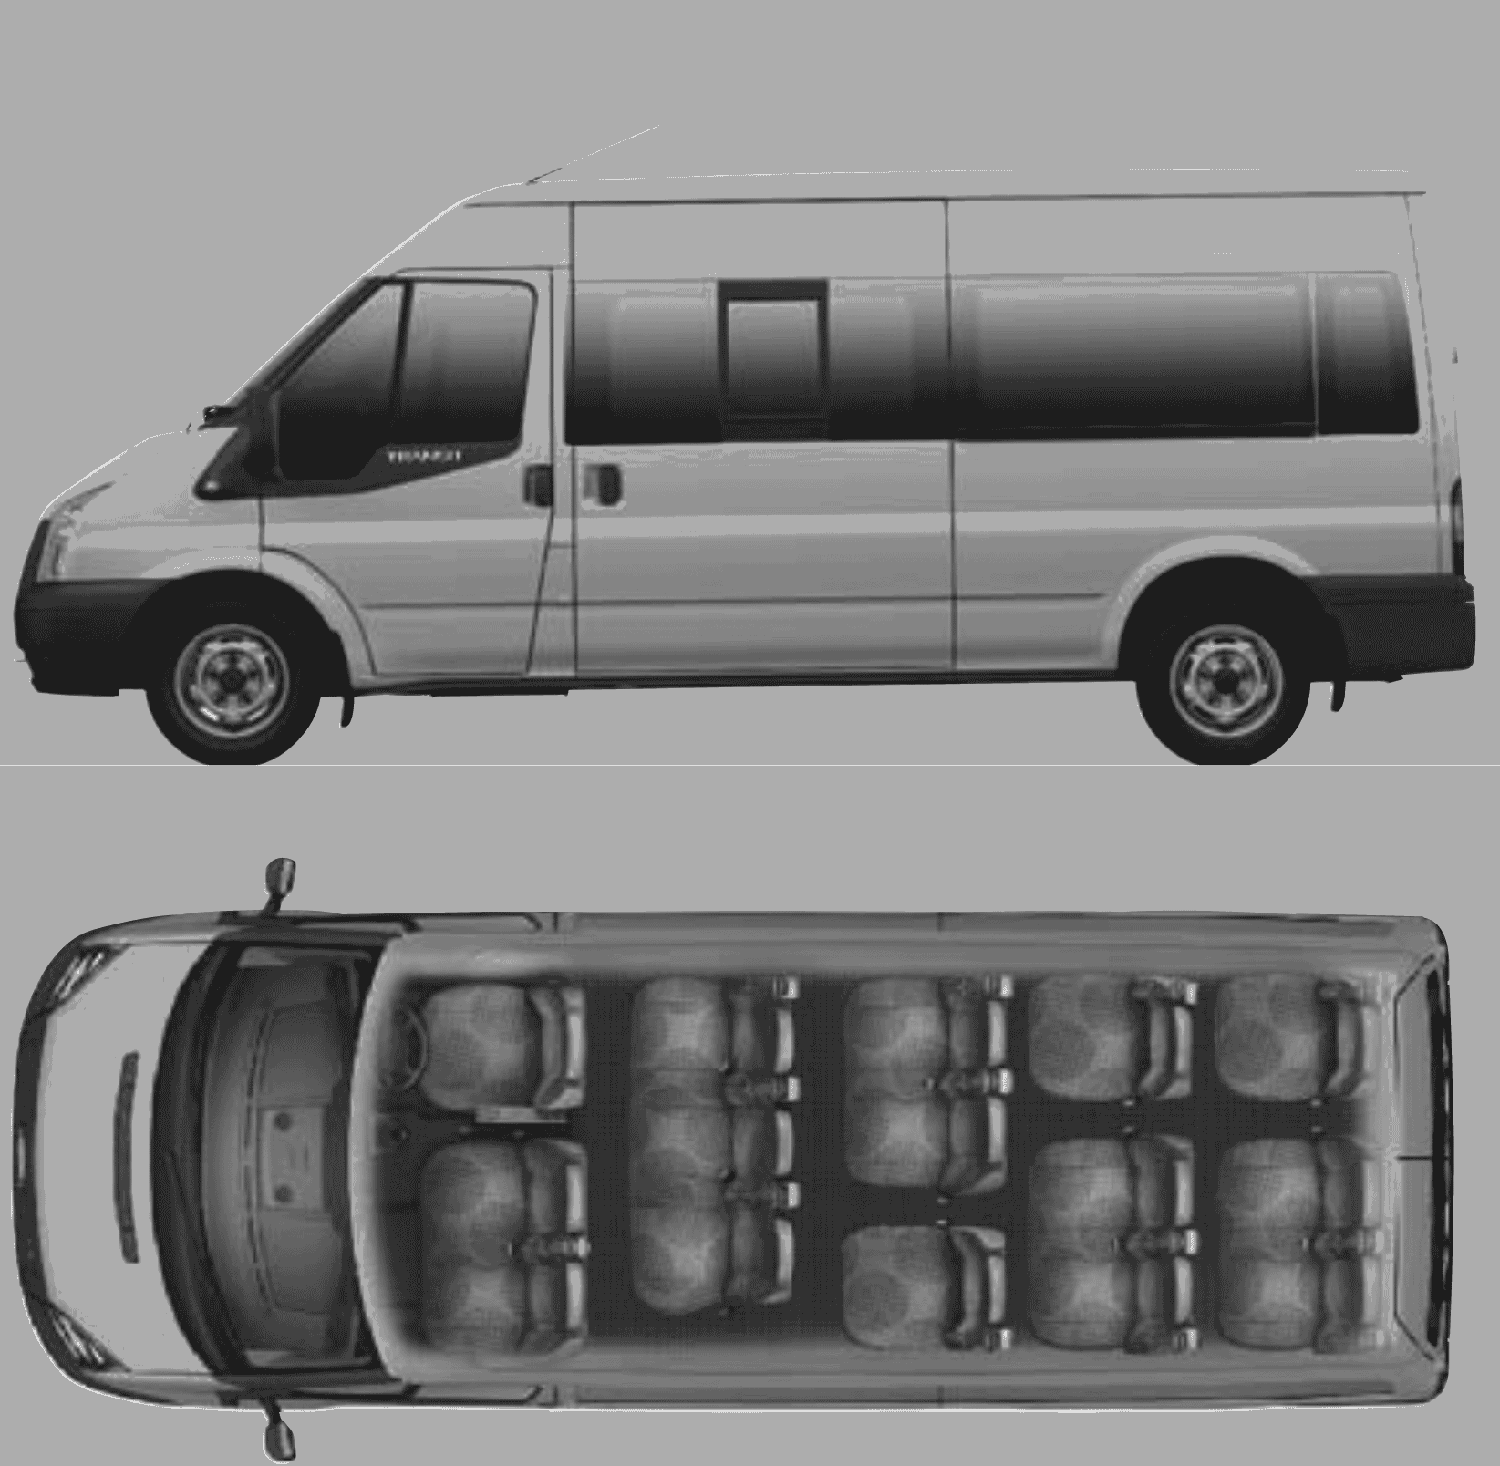 Ford transit 15 seat minibus dimensions #3